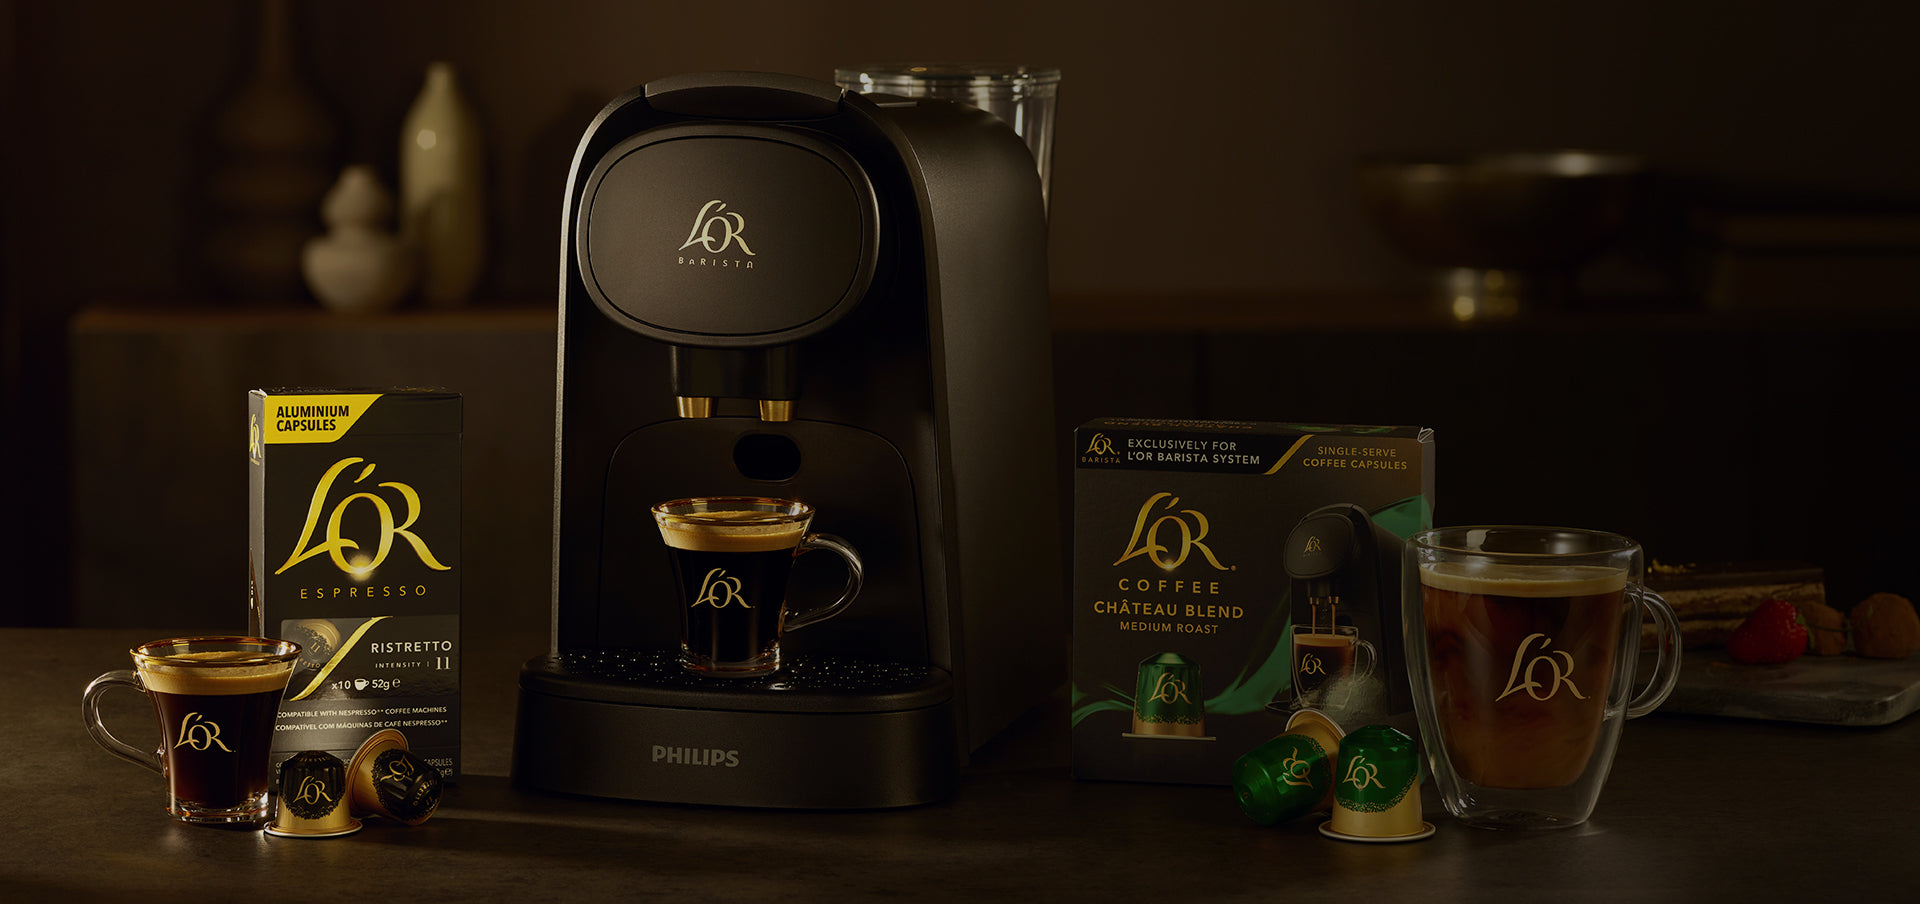 L'OR Capsules de café ristretto intensité 11 compatibles Nespresso